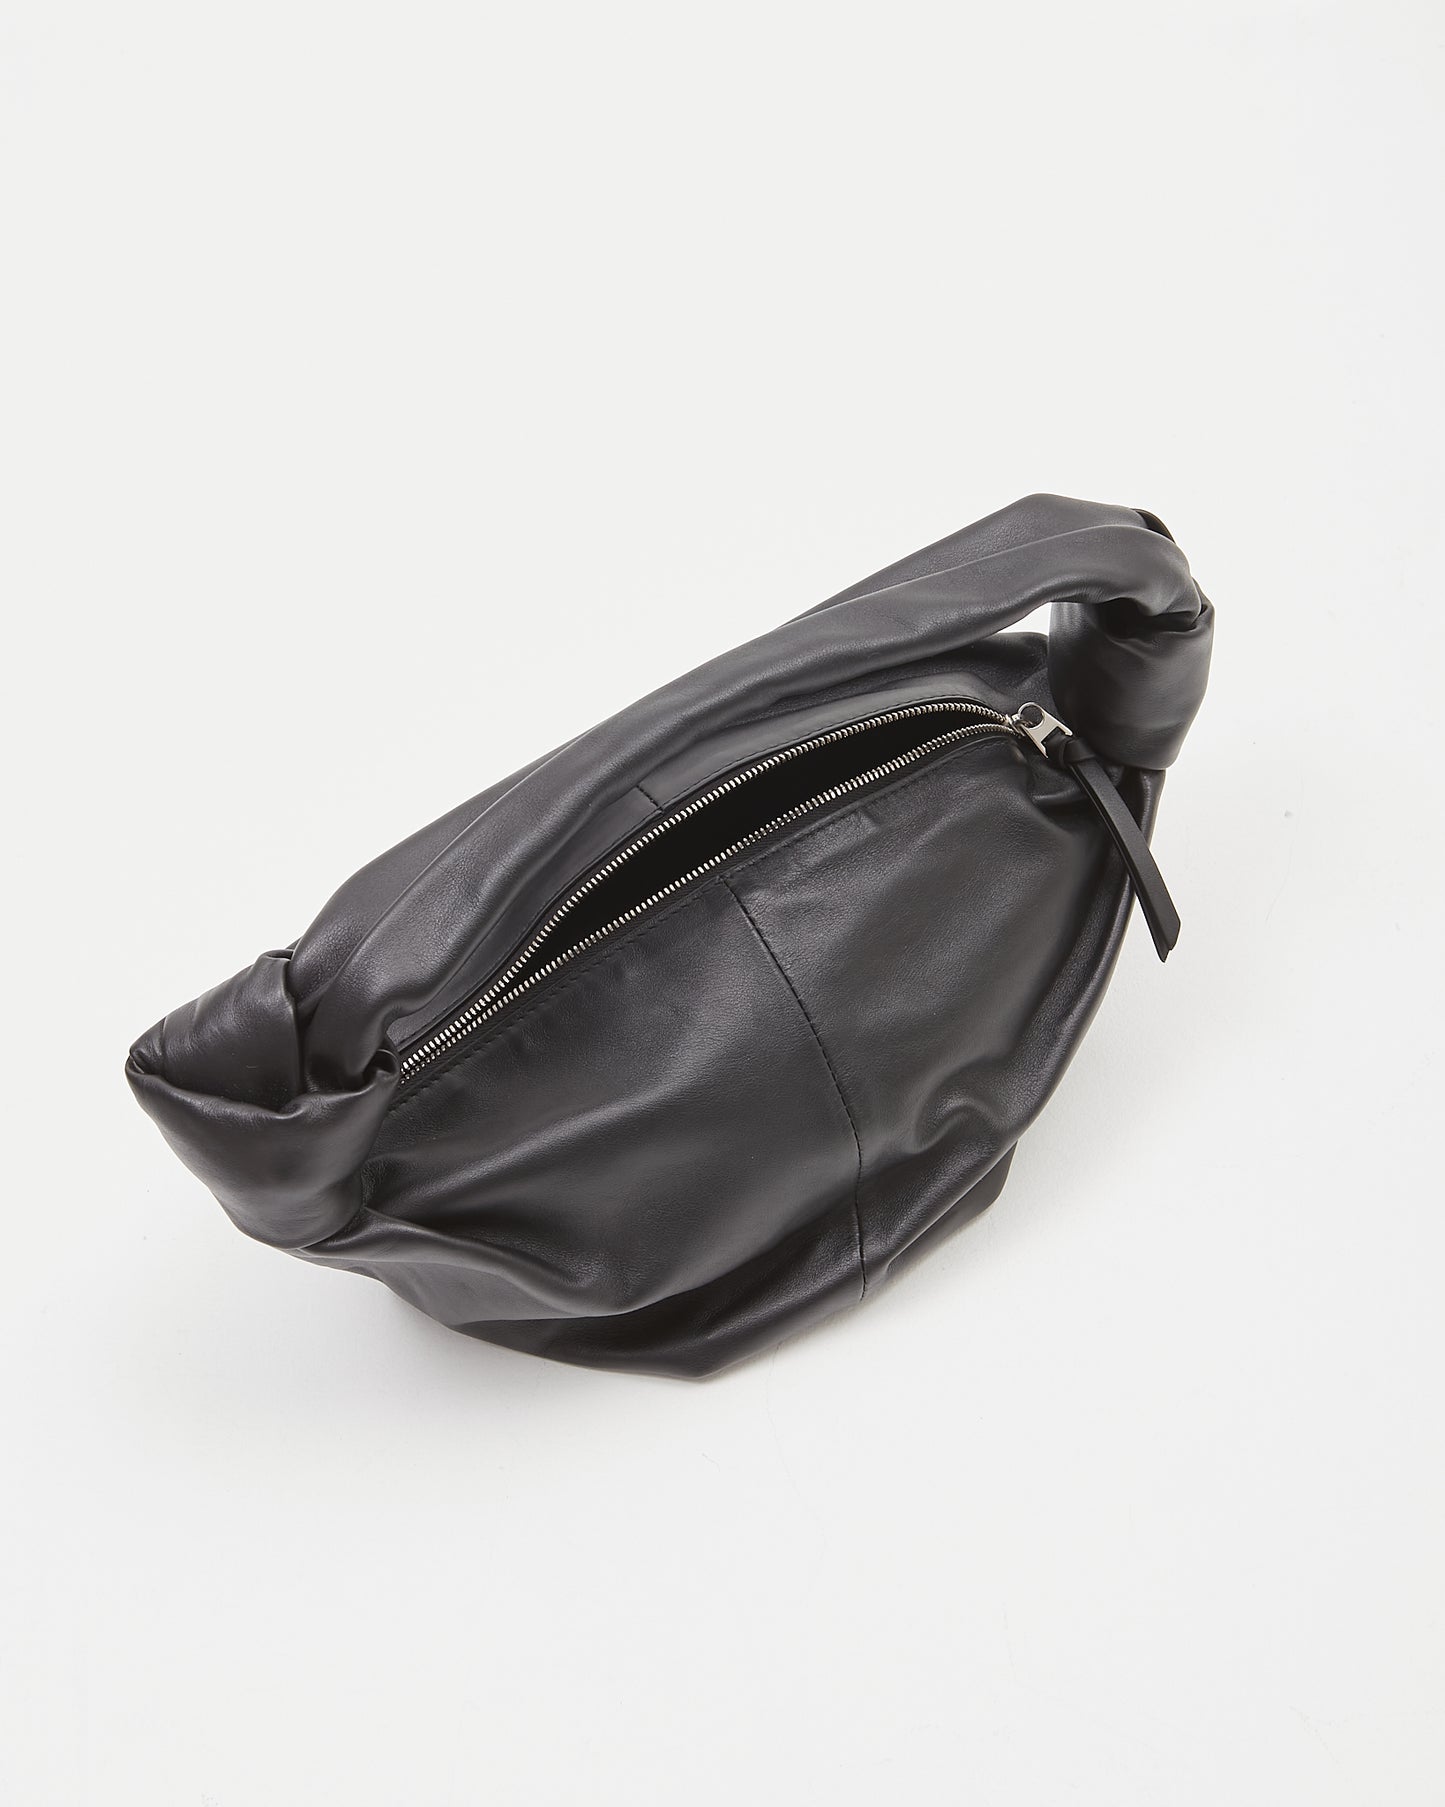 Bottega Veneta Black Leather Double Knot Shoulder Bag